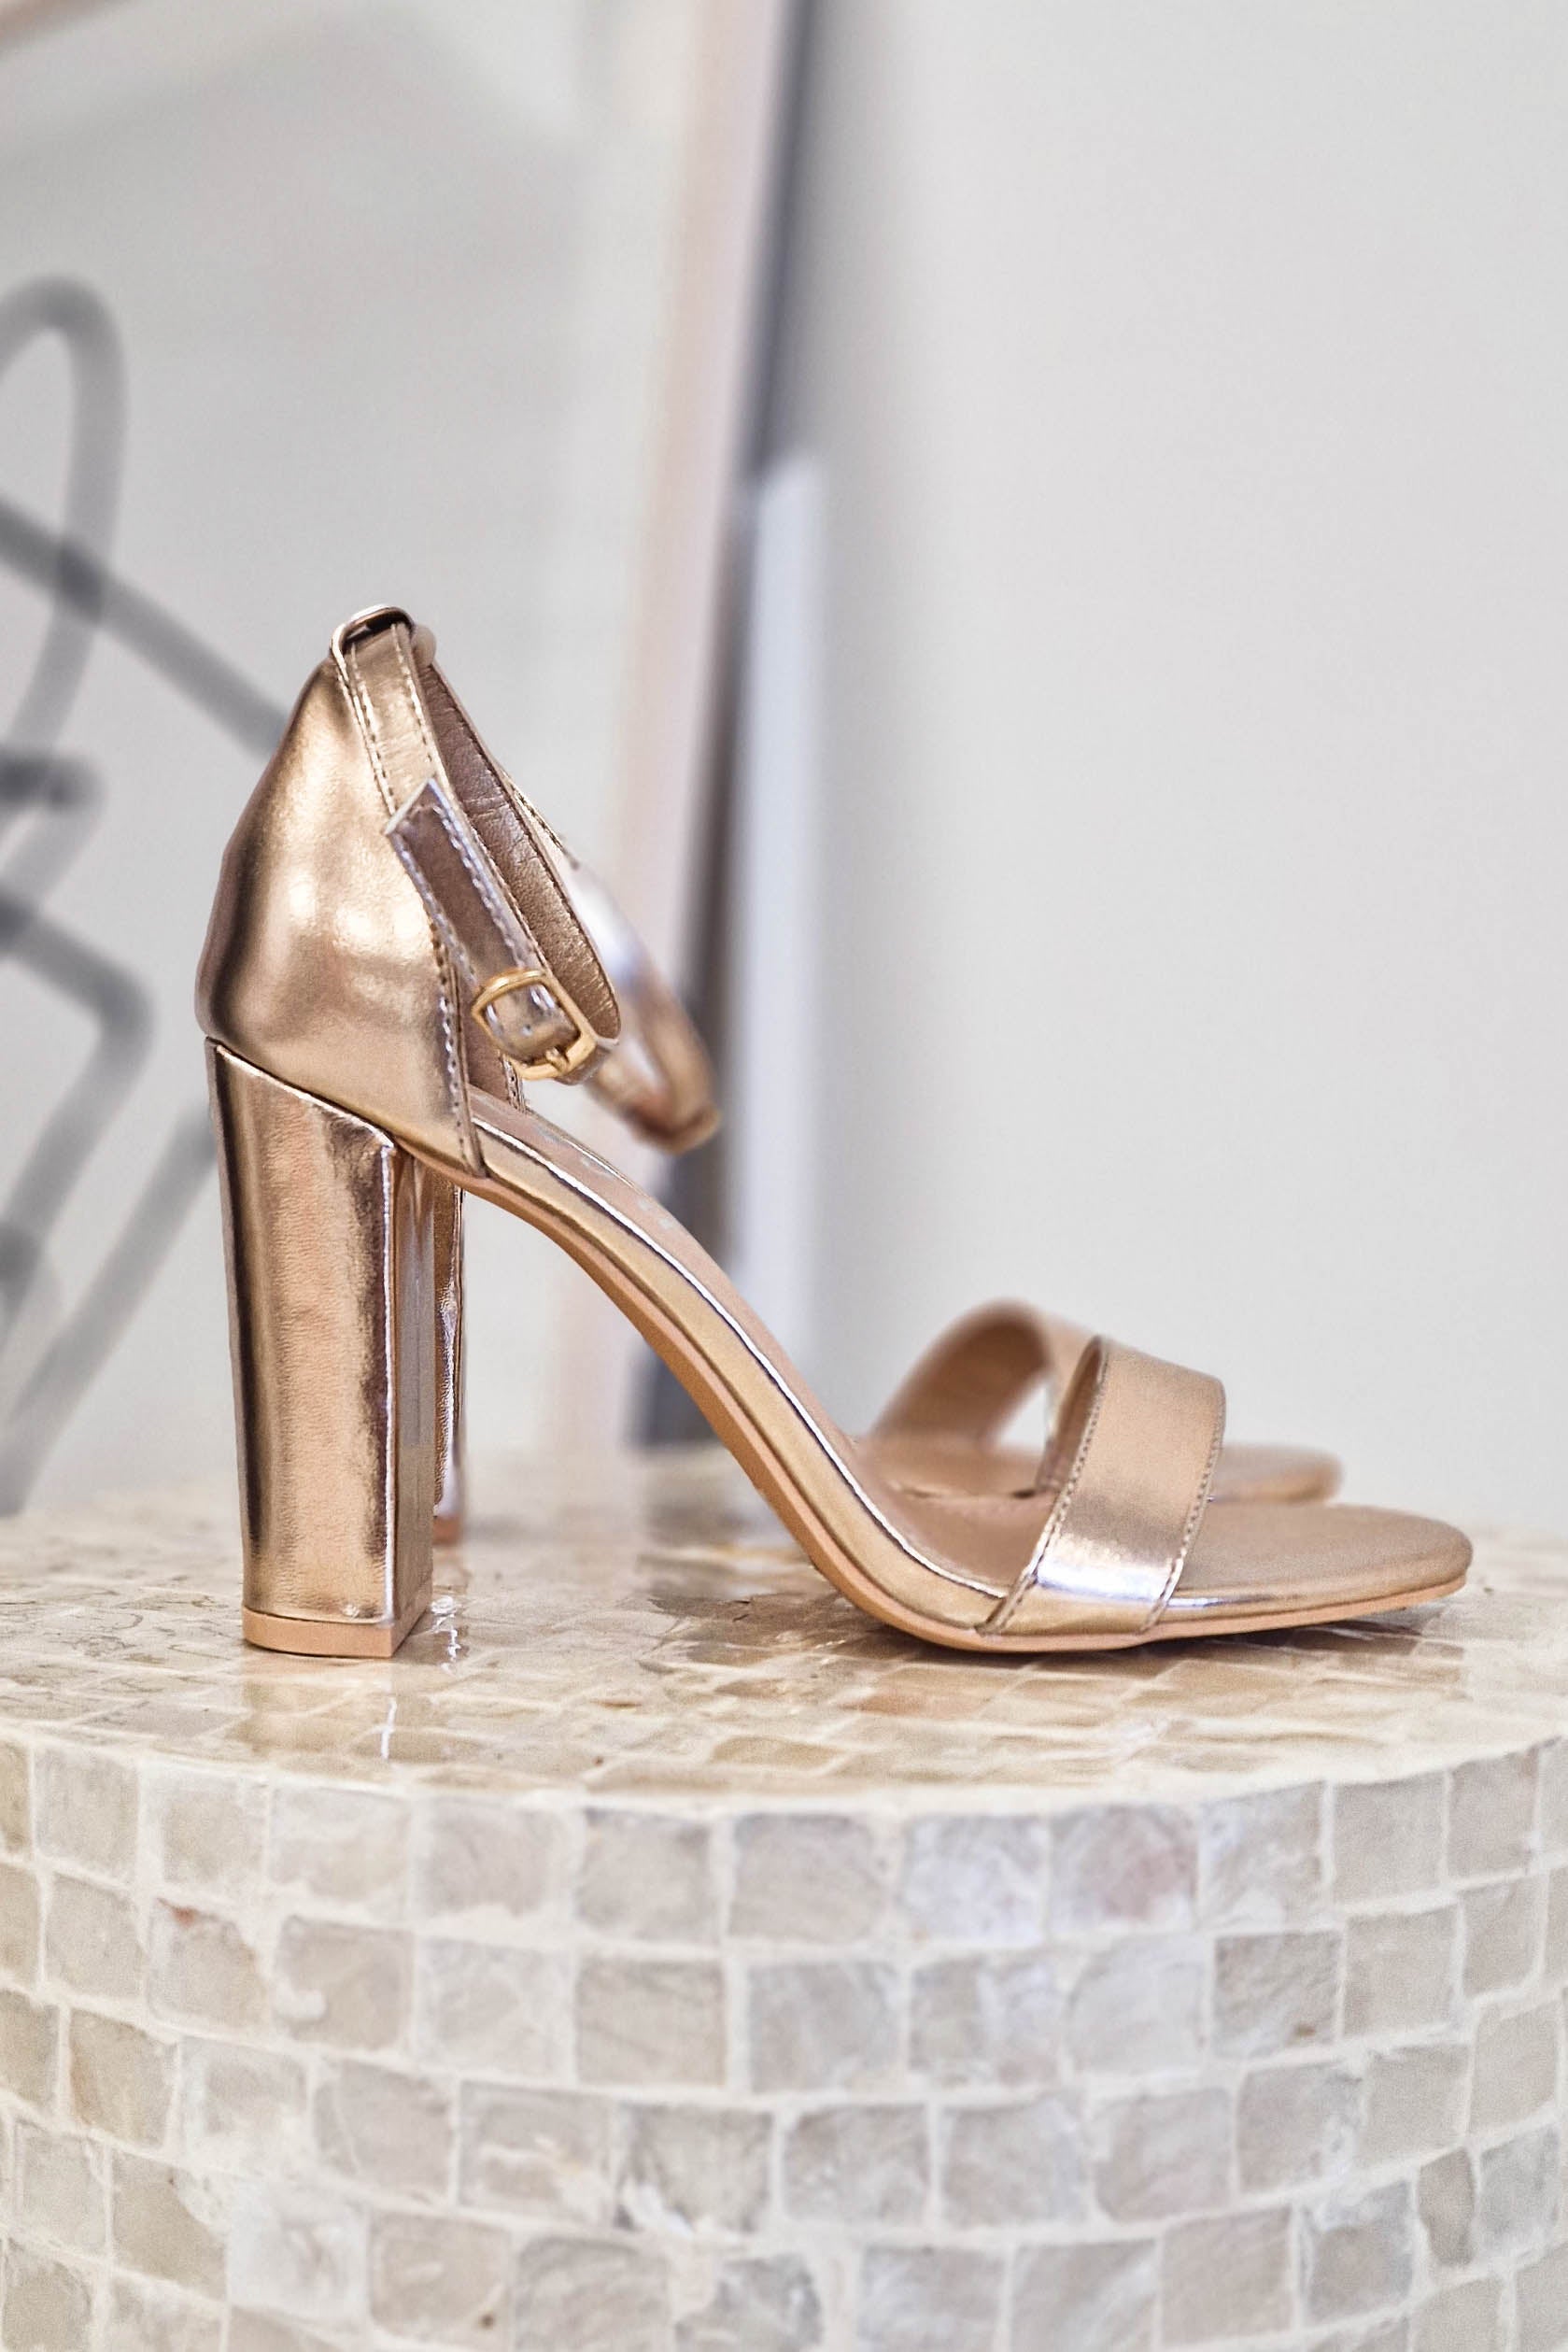 Gold Heels for sale in Dublin, Ireland | Facebook Marketplace | Facebook